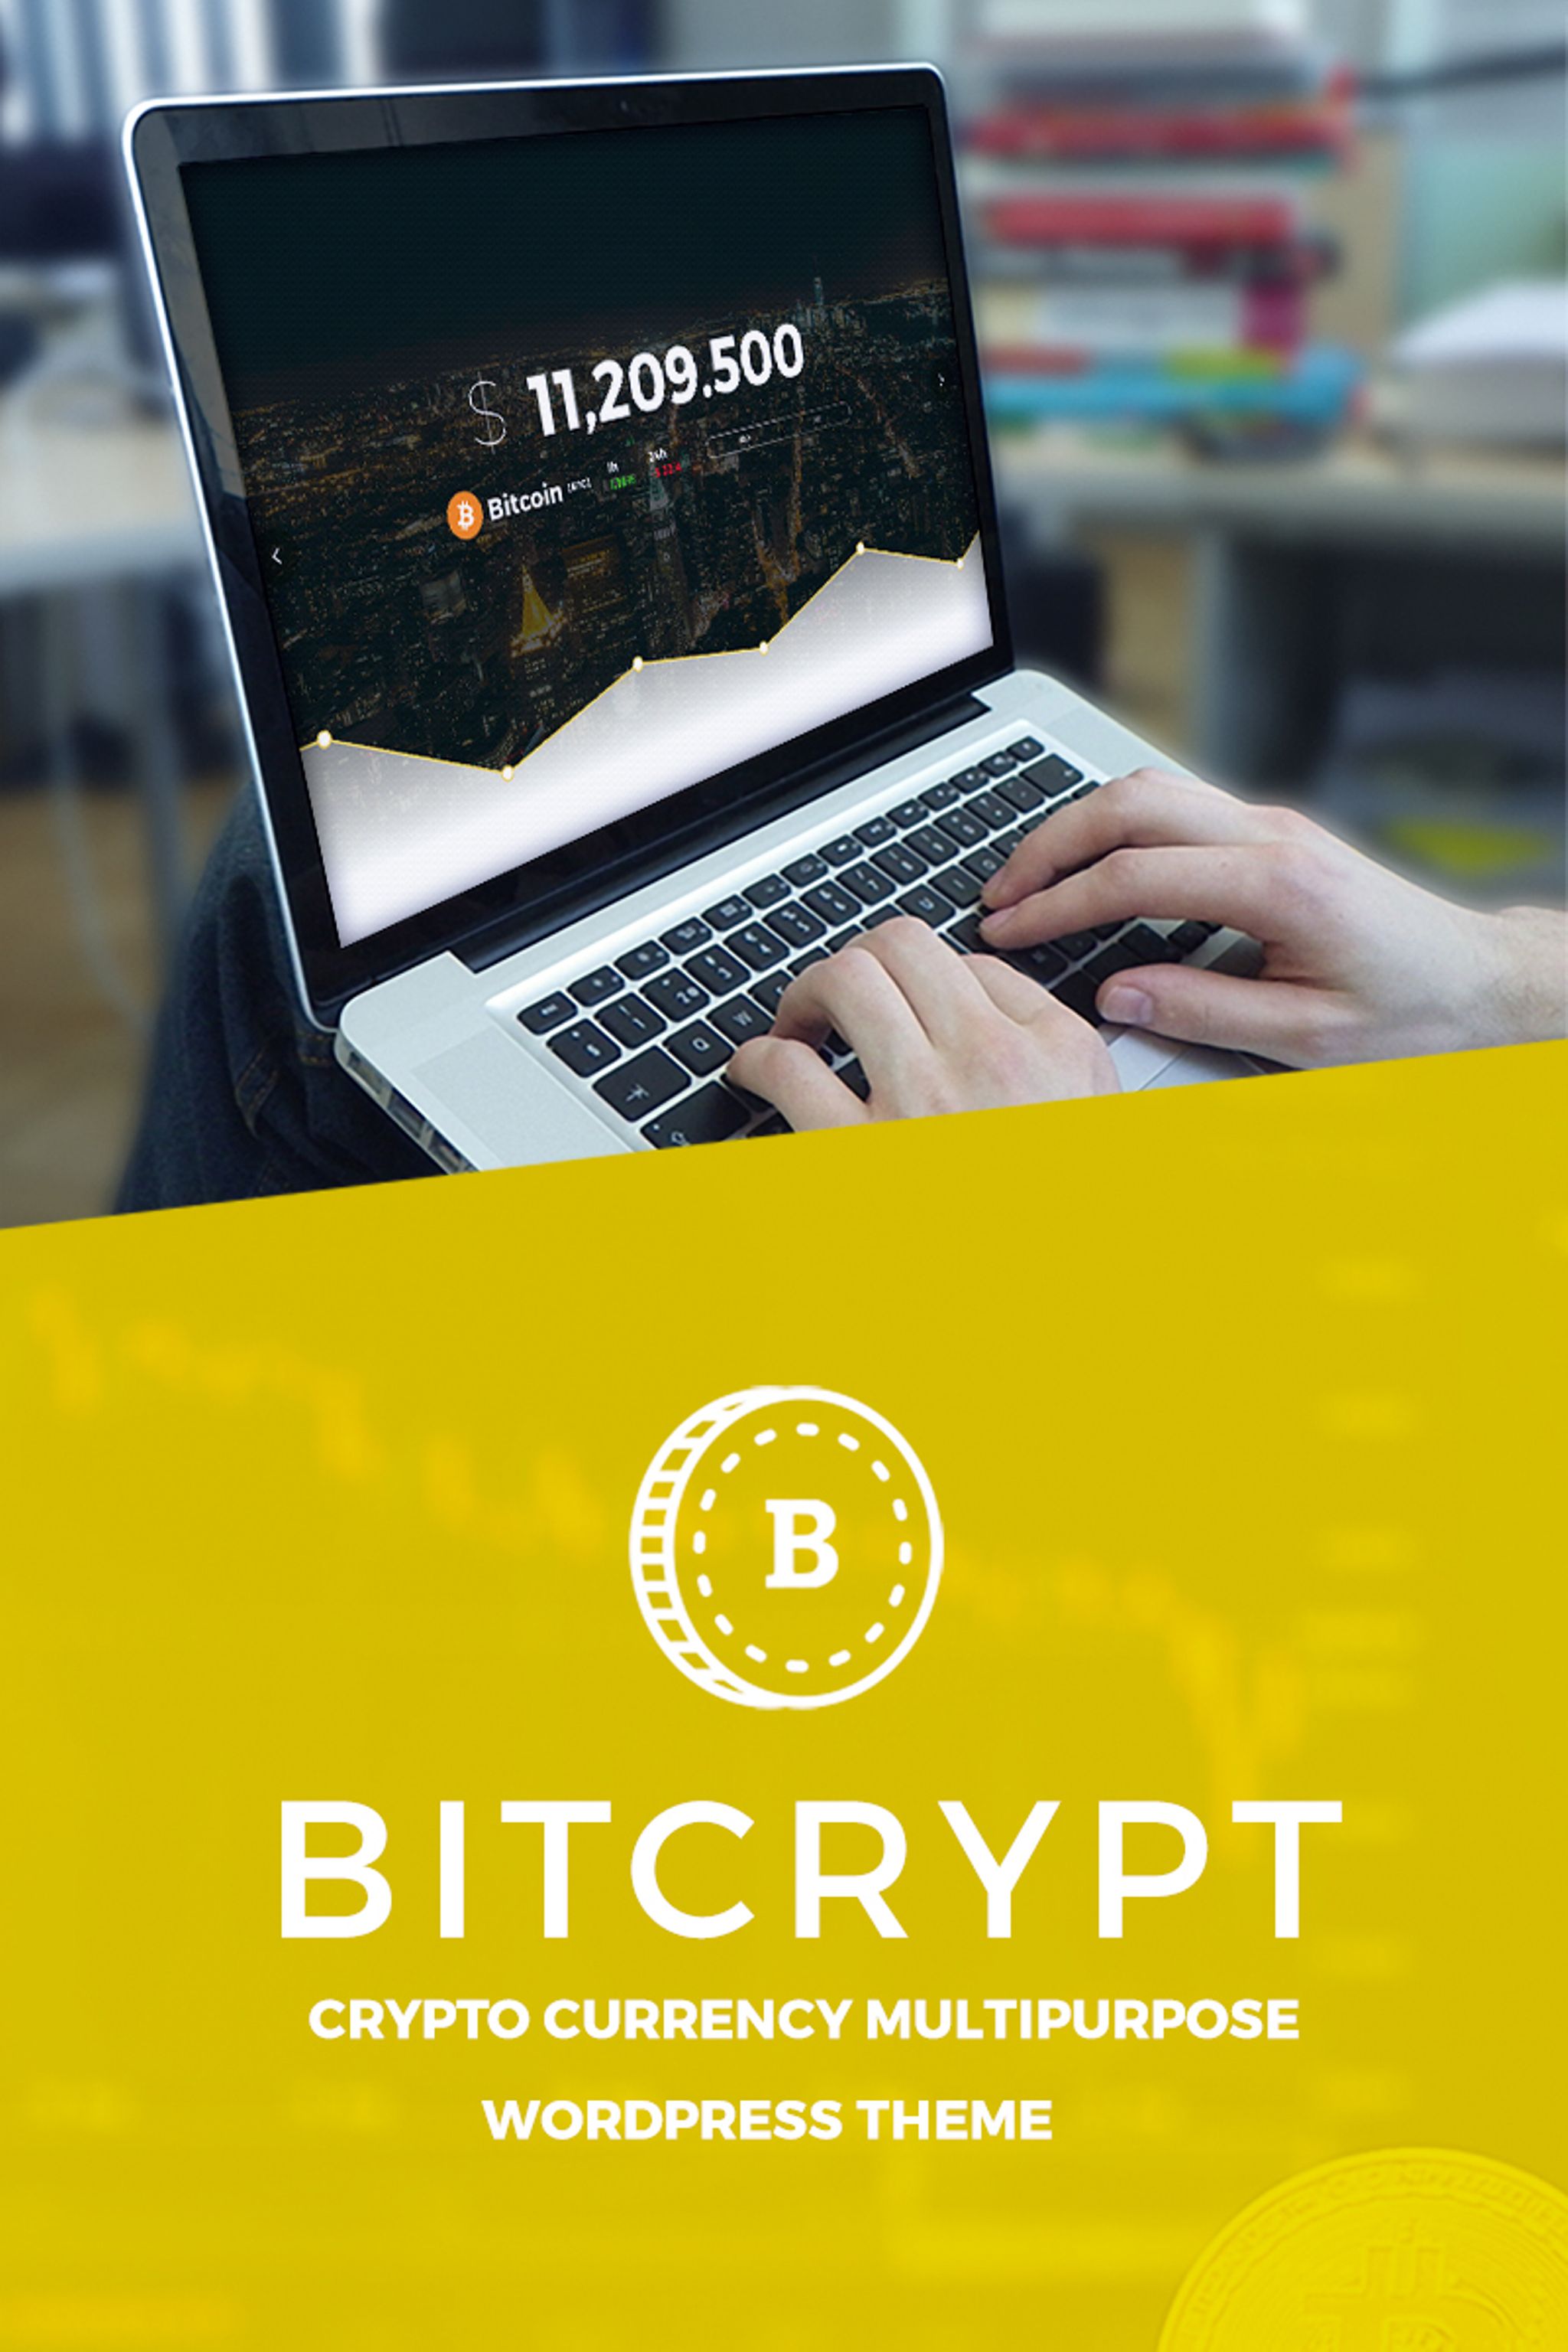 Btc wordpress __________ is the basis of bitcoin cybercurrency